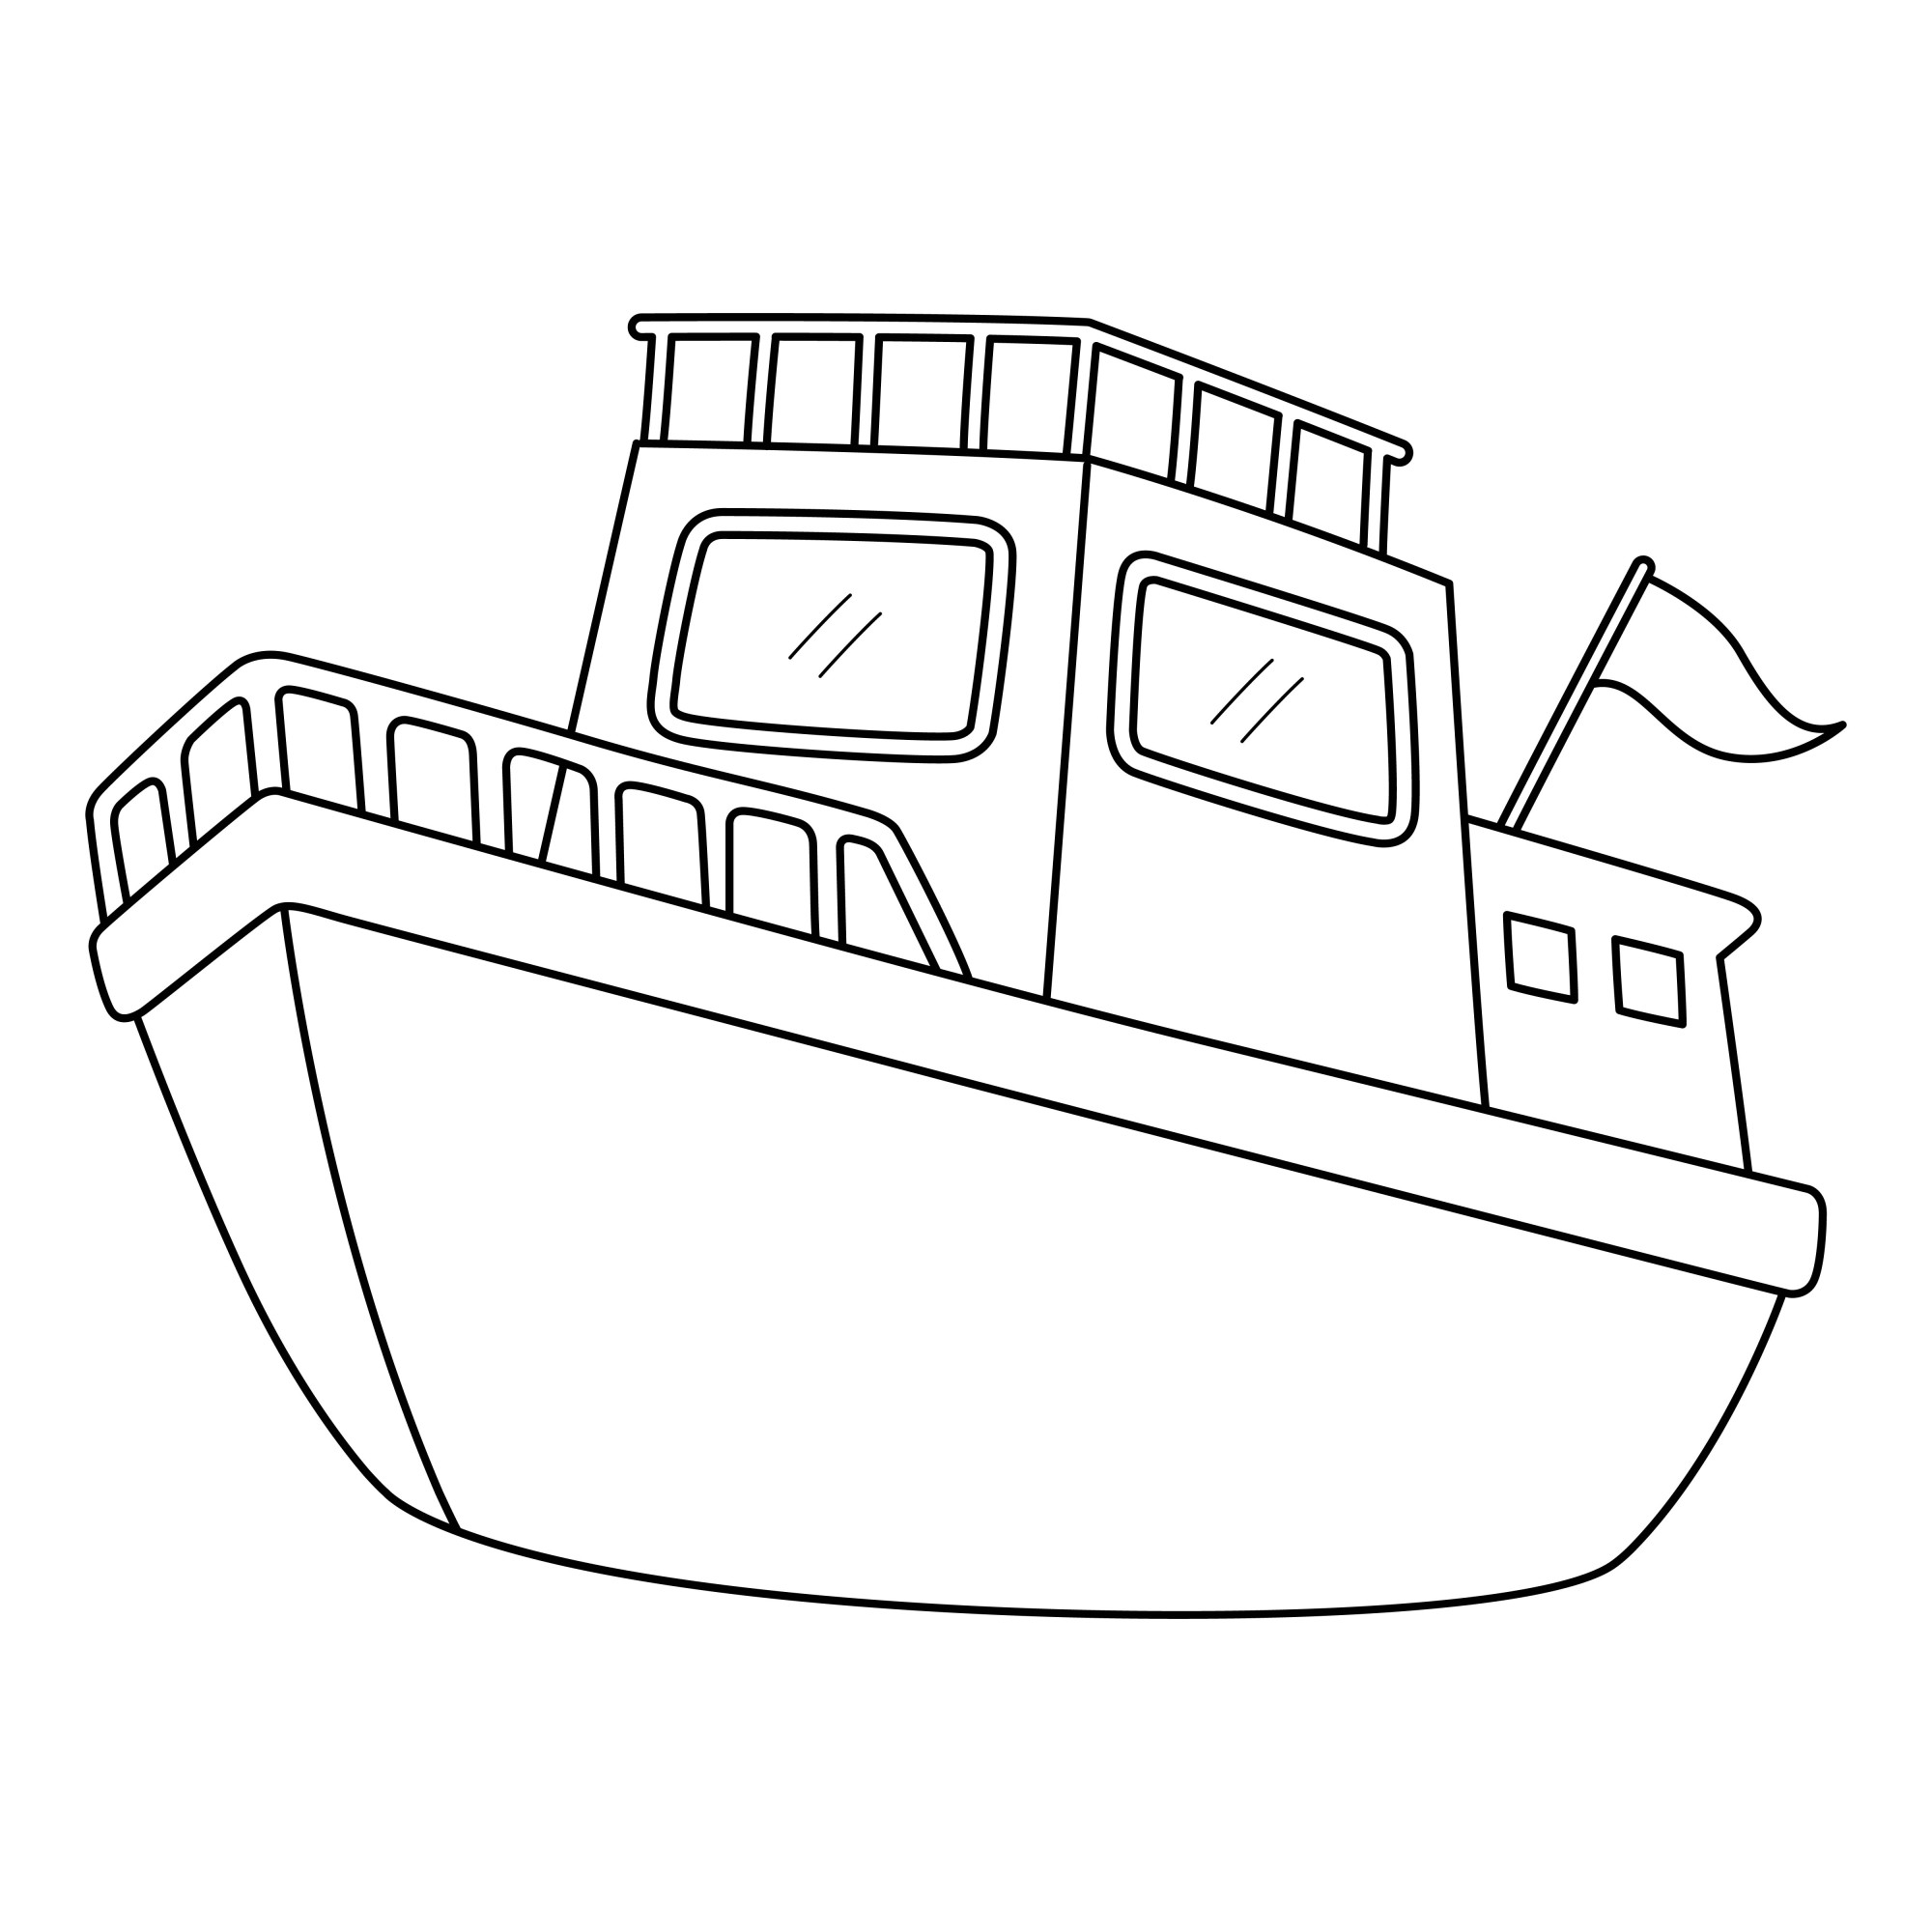 Раскраска для детей: яхта с флагом на борту